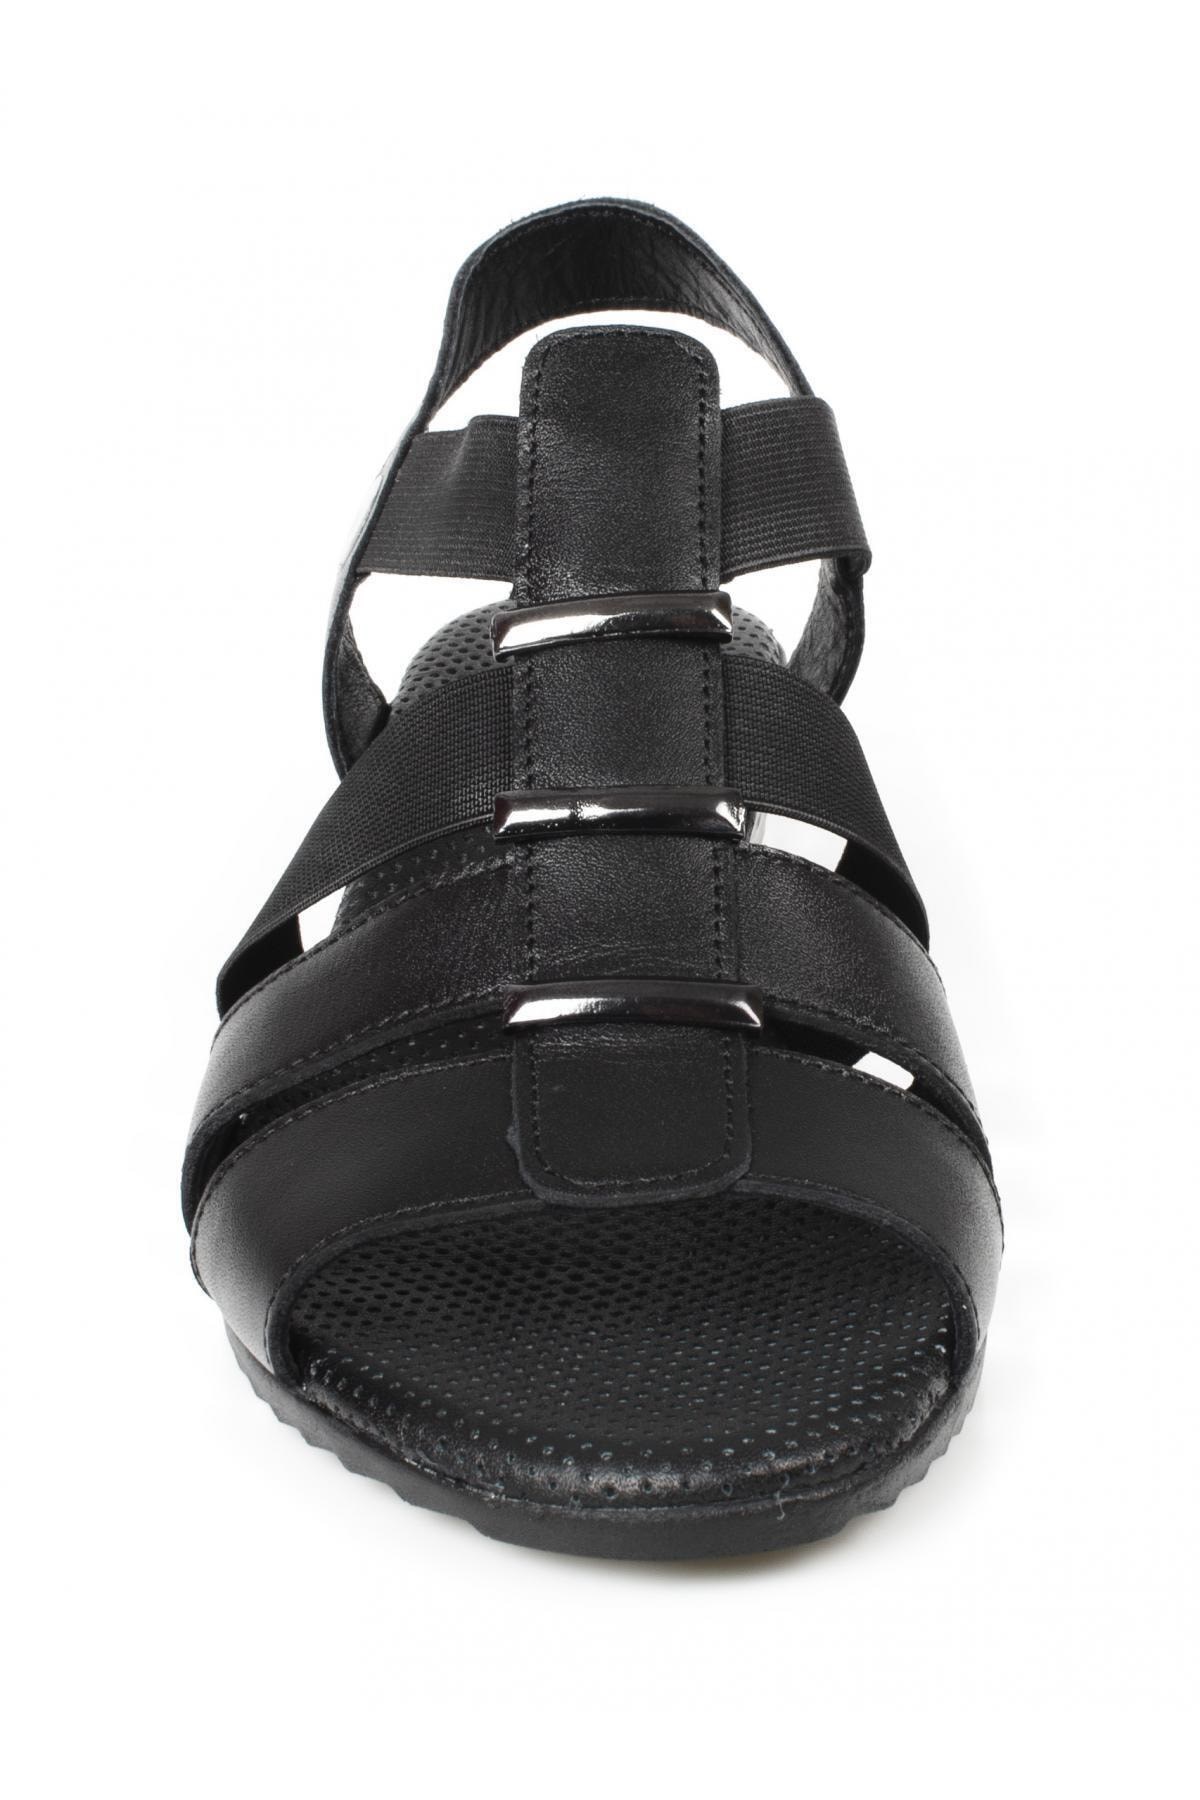 Mammamia Kadın Sandalet D22YS-1310 Siyah Faber